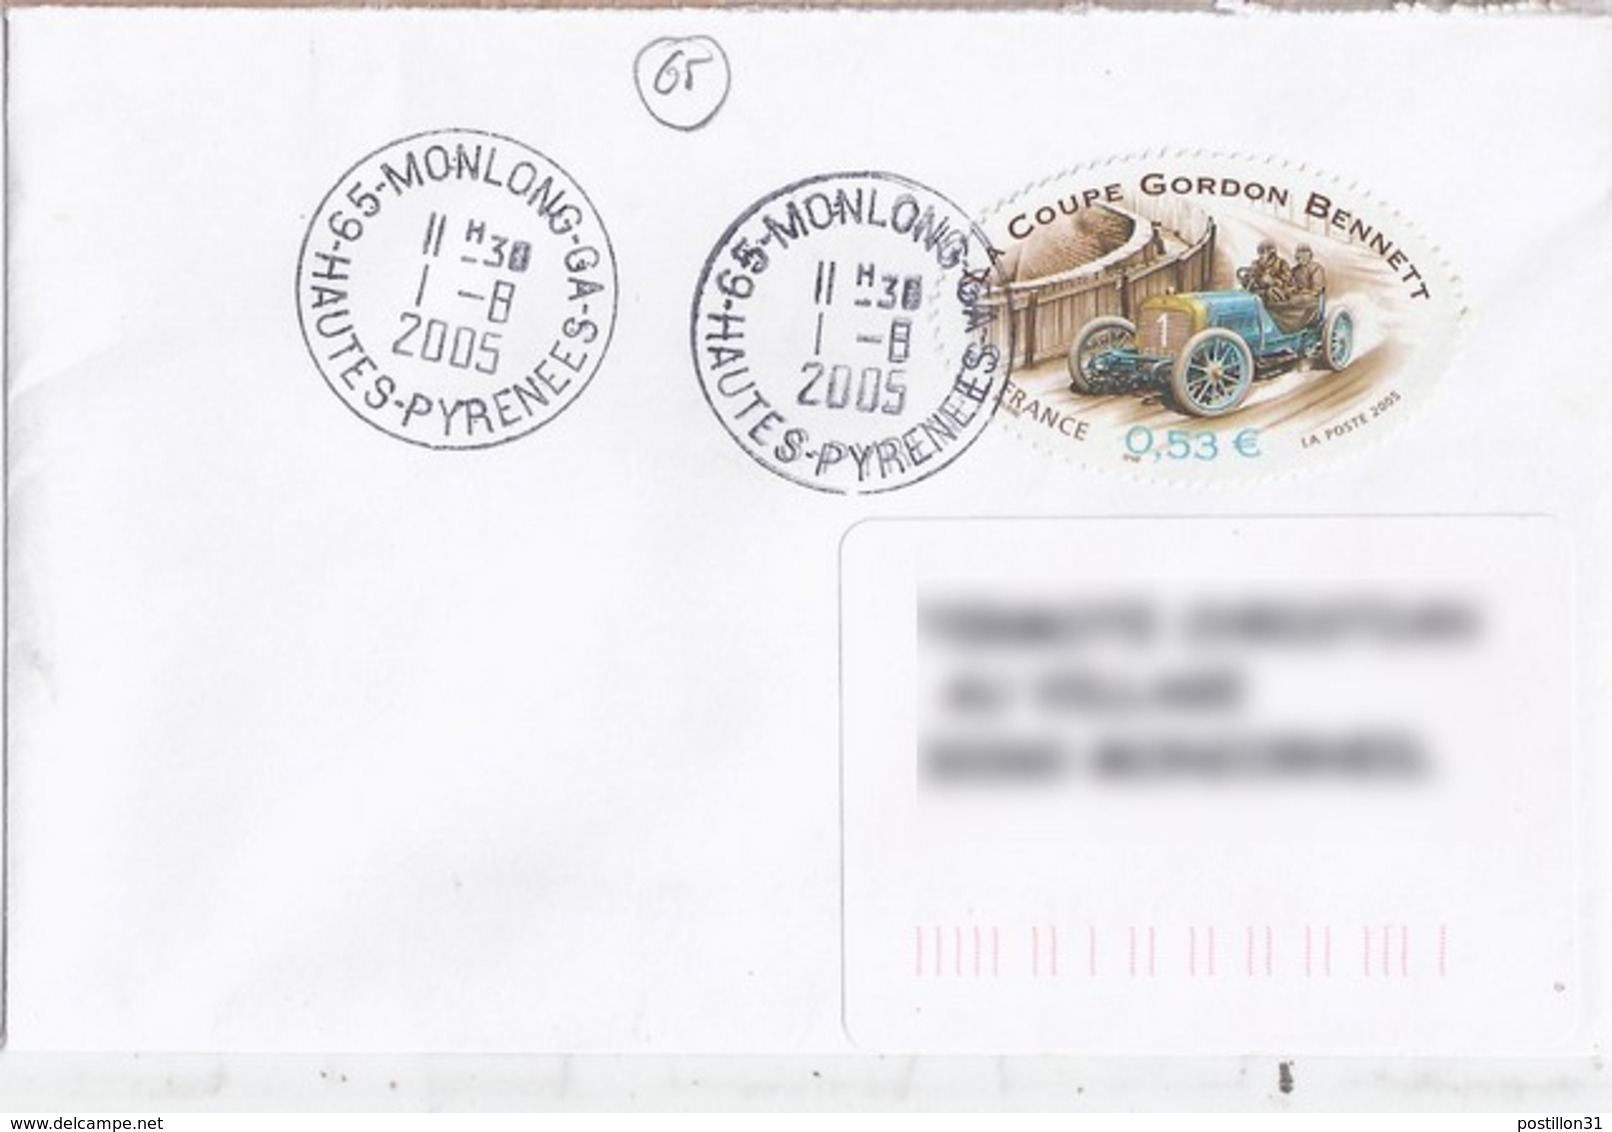 65 - HAUTES PYRENEES -  65.MONLONG GA - 1992/05 - TàD DE TYPE A9 - Manual Postmarks